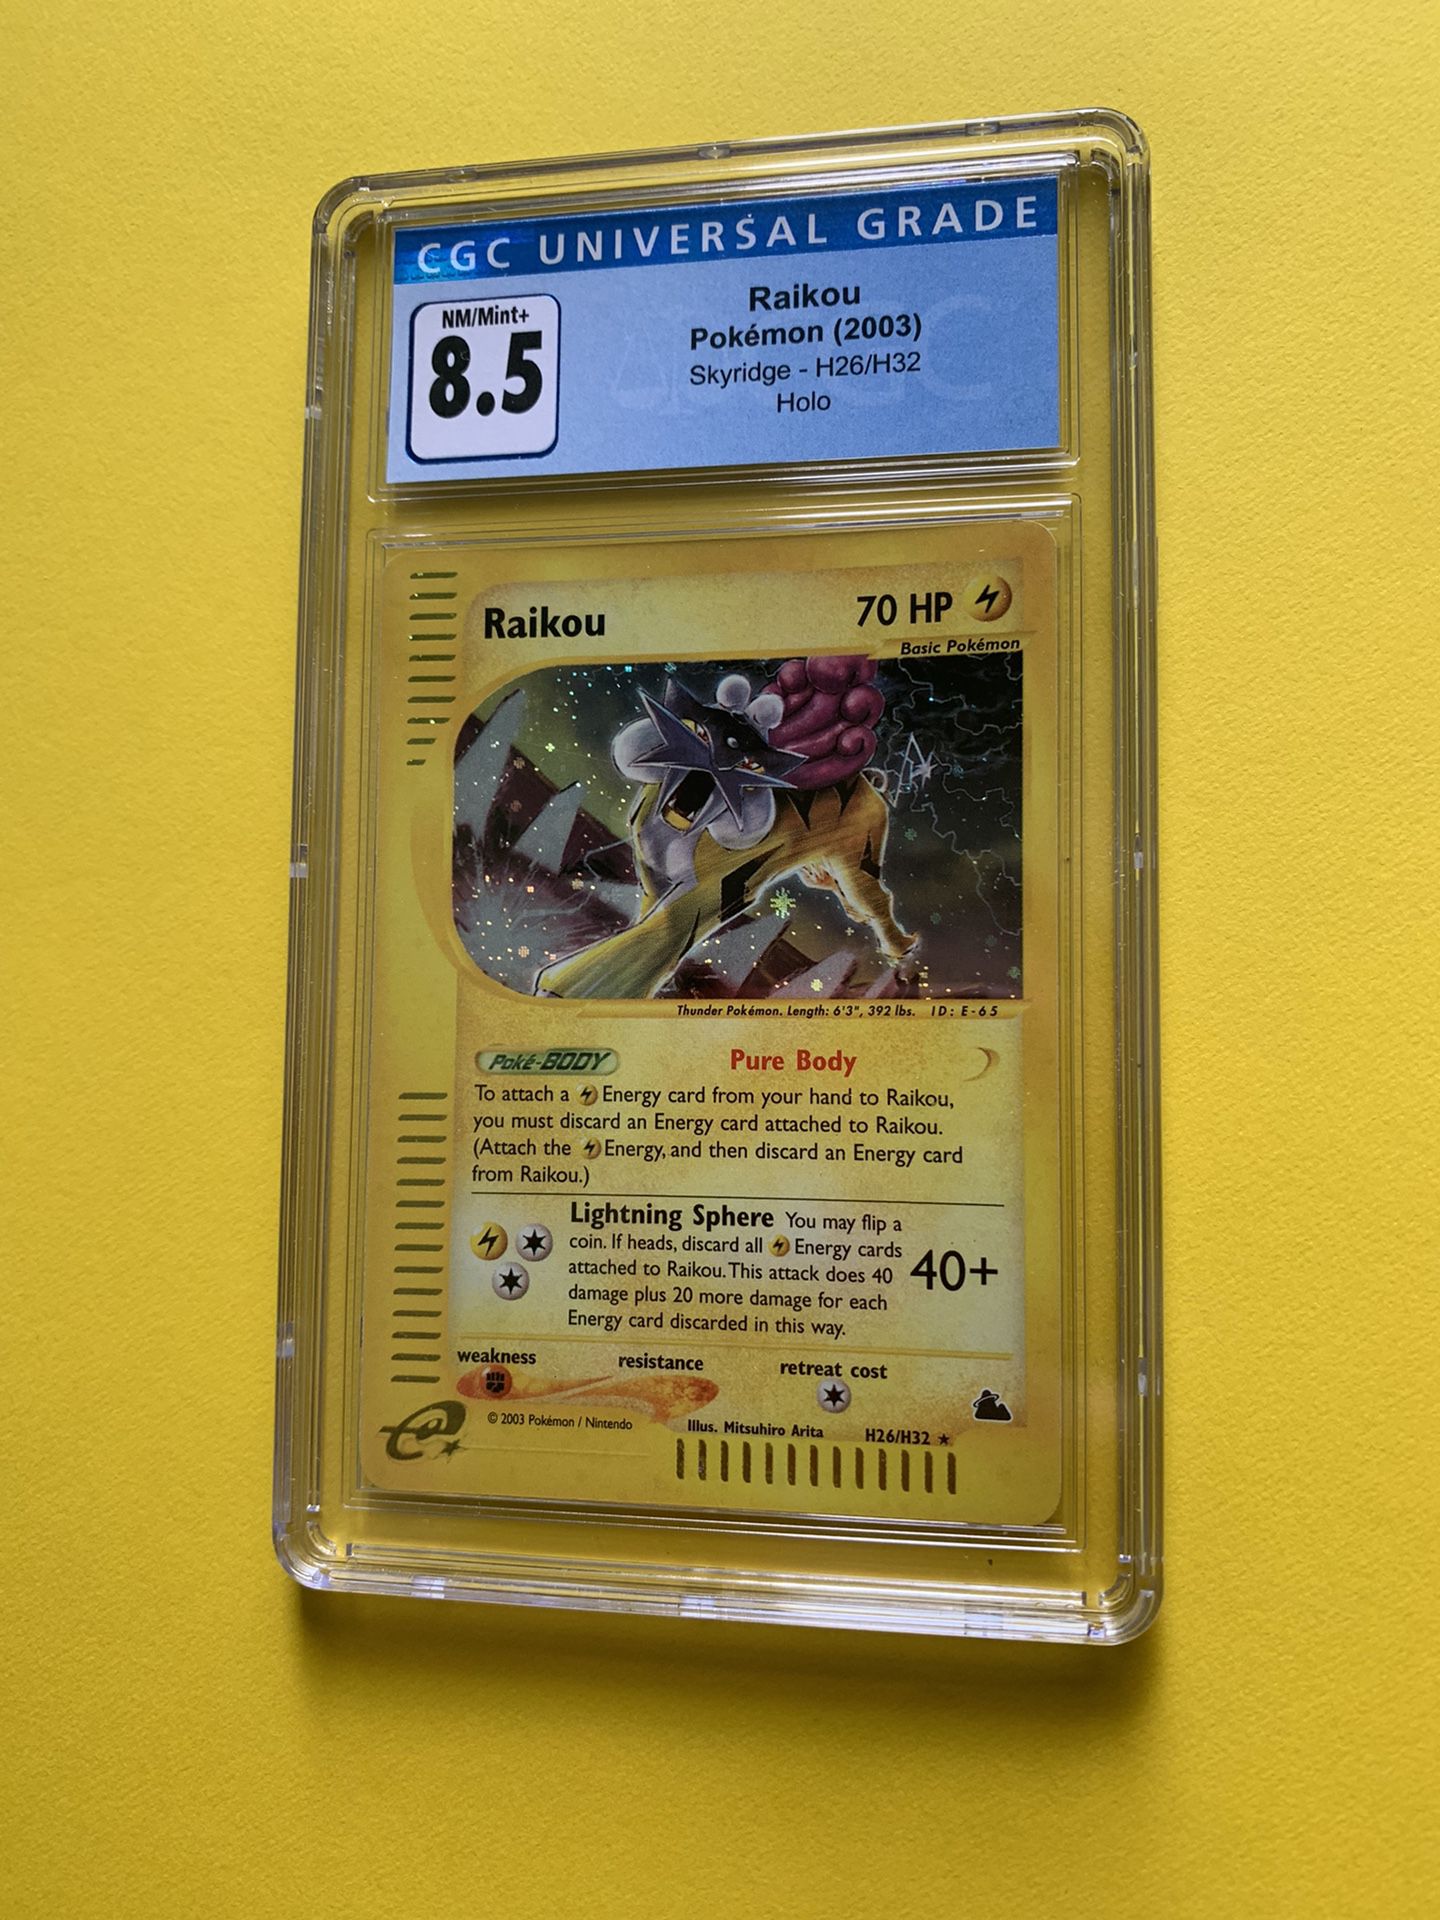 Raikou H26/H32 Skyridge holo Pokemon Card CGC 8.5 Nm/Mint+